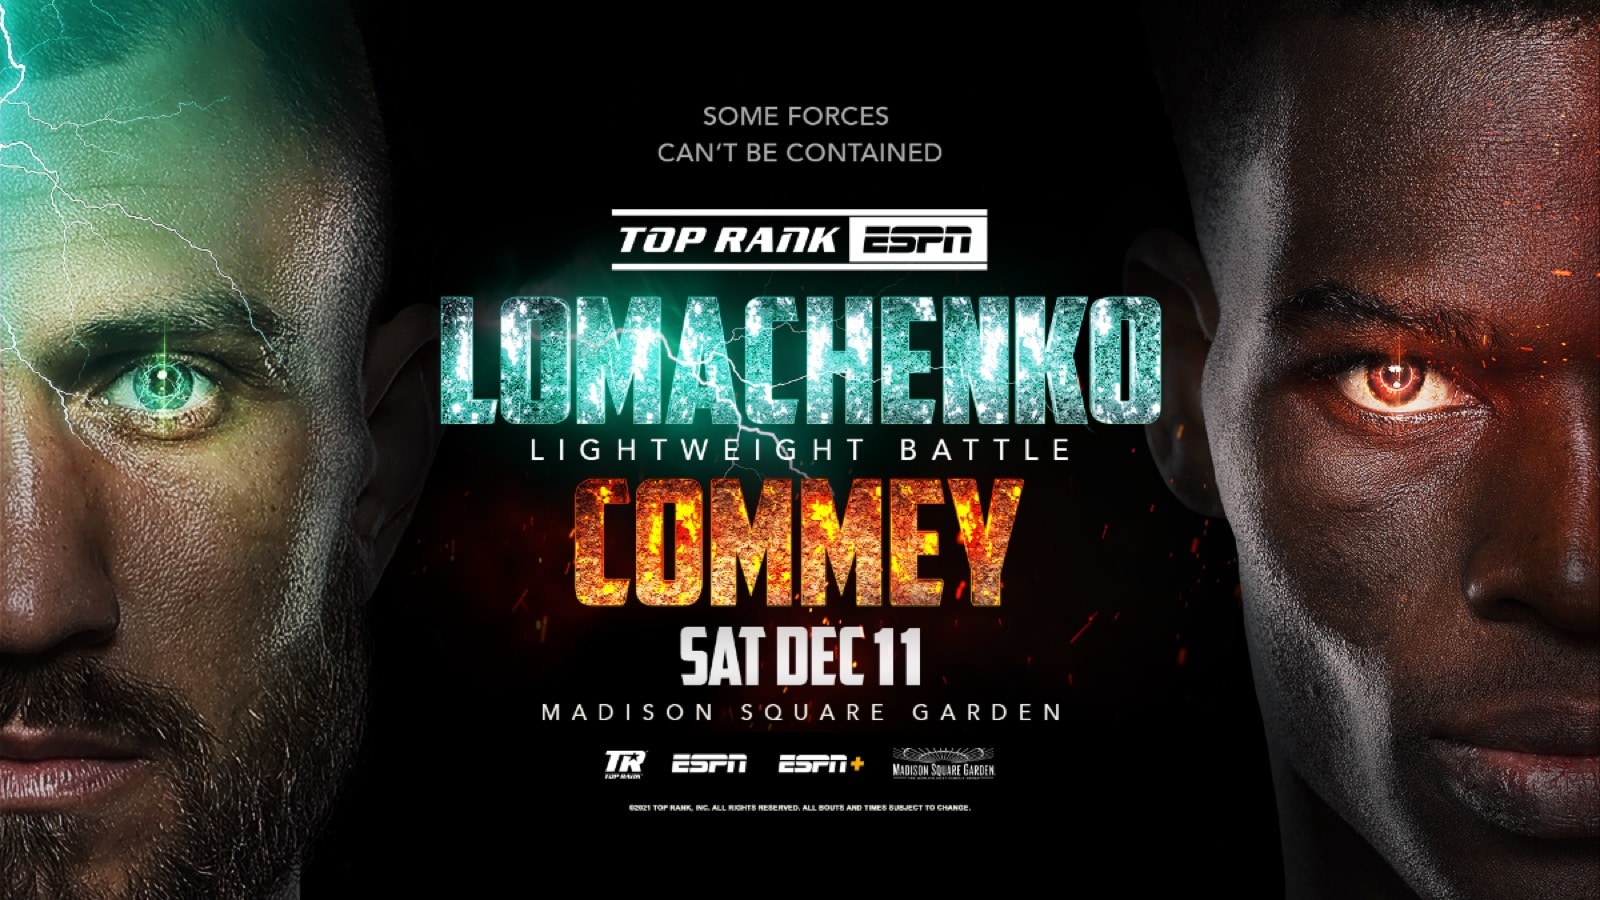 Lomachenko vs Commey - ESPN, Sky, FITE - Dec 11 - 9 pm ET